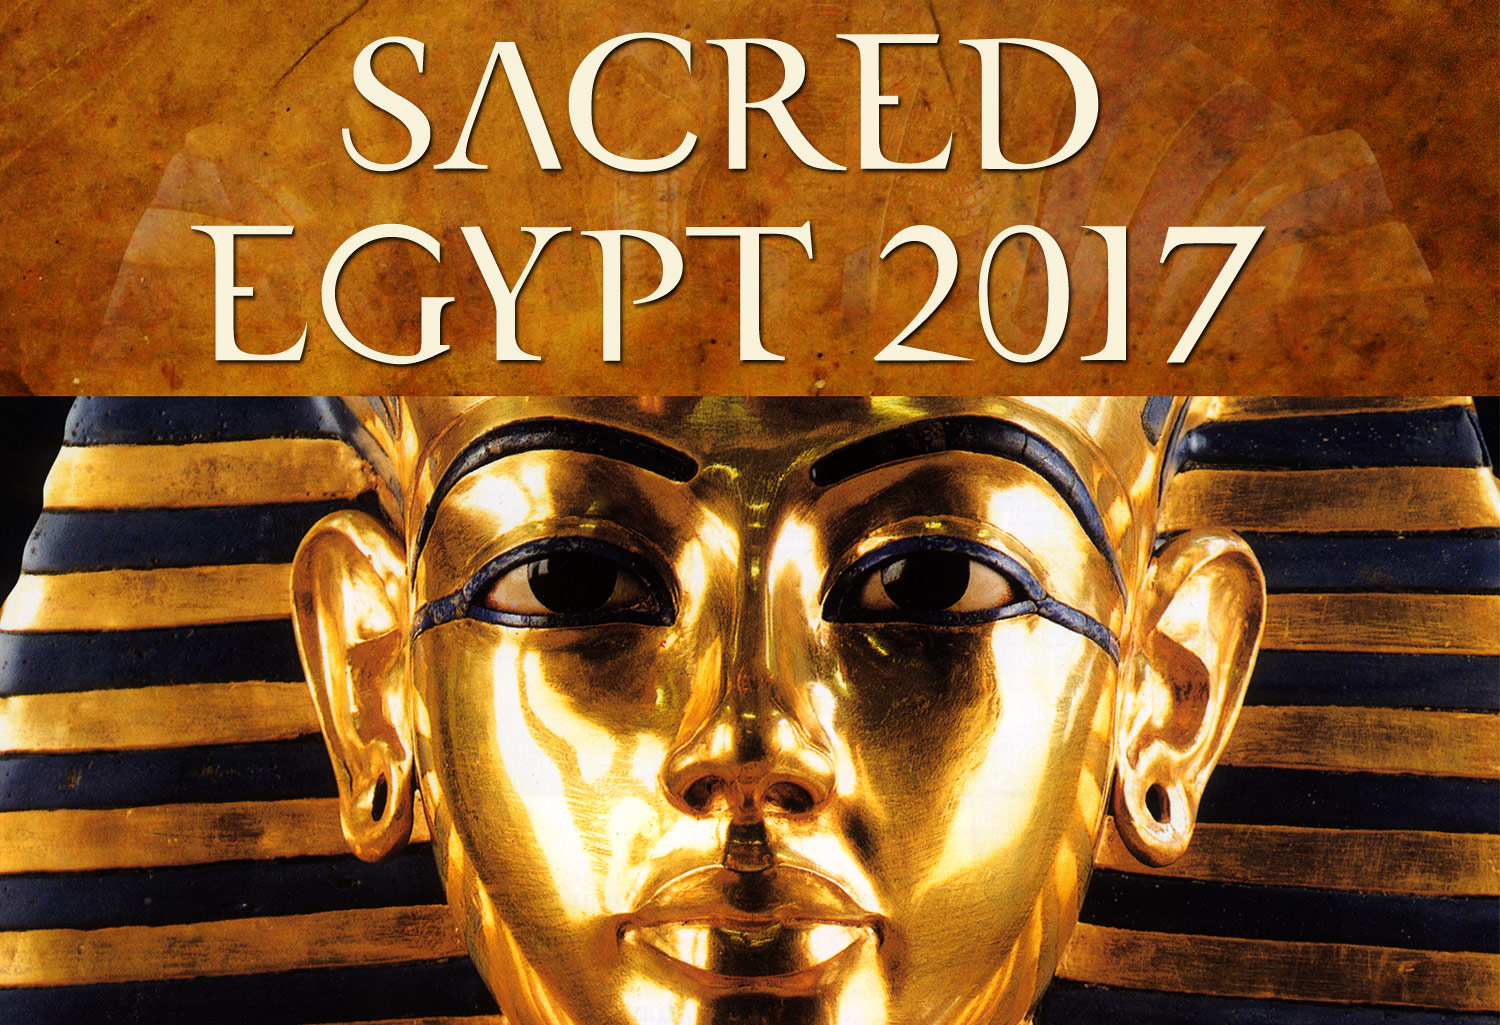 SACRED EGYPT 2017